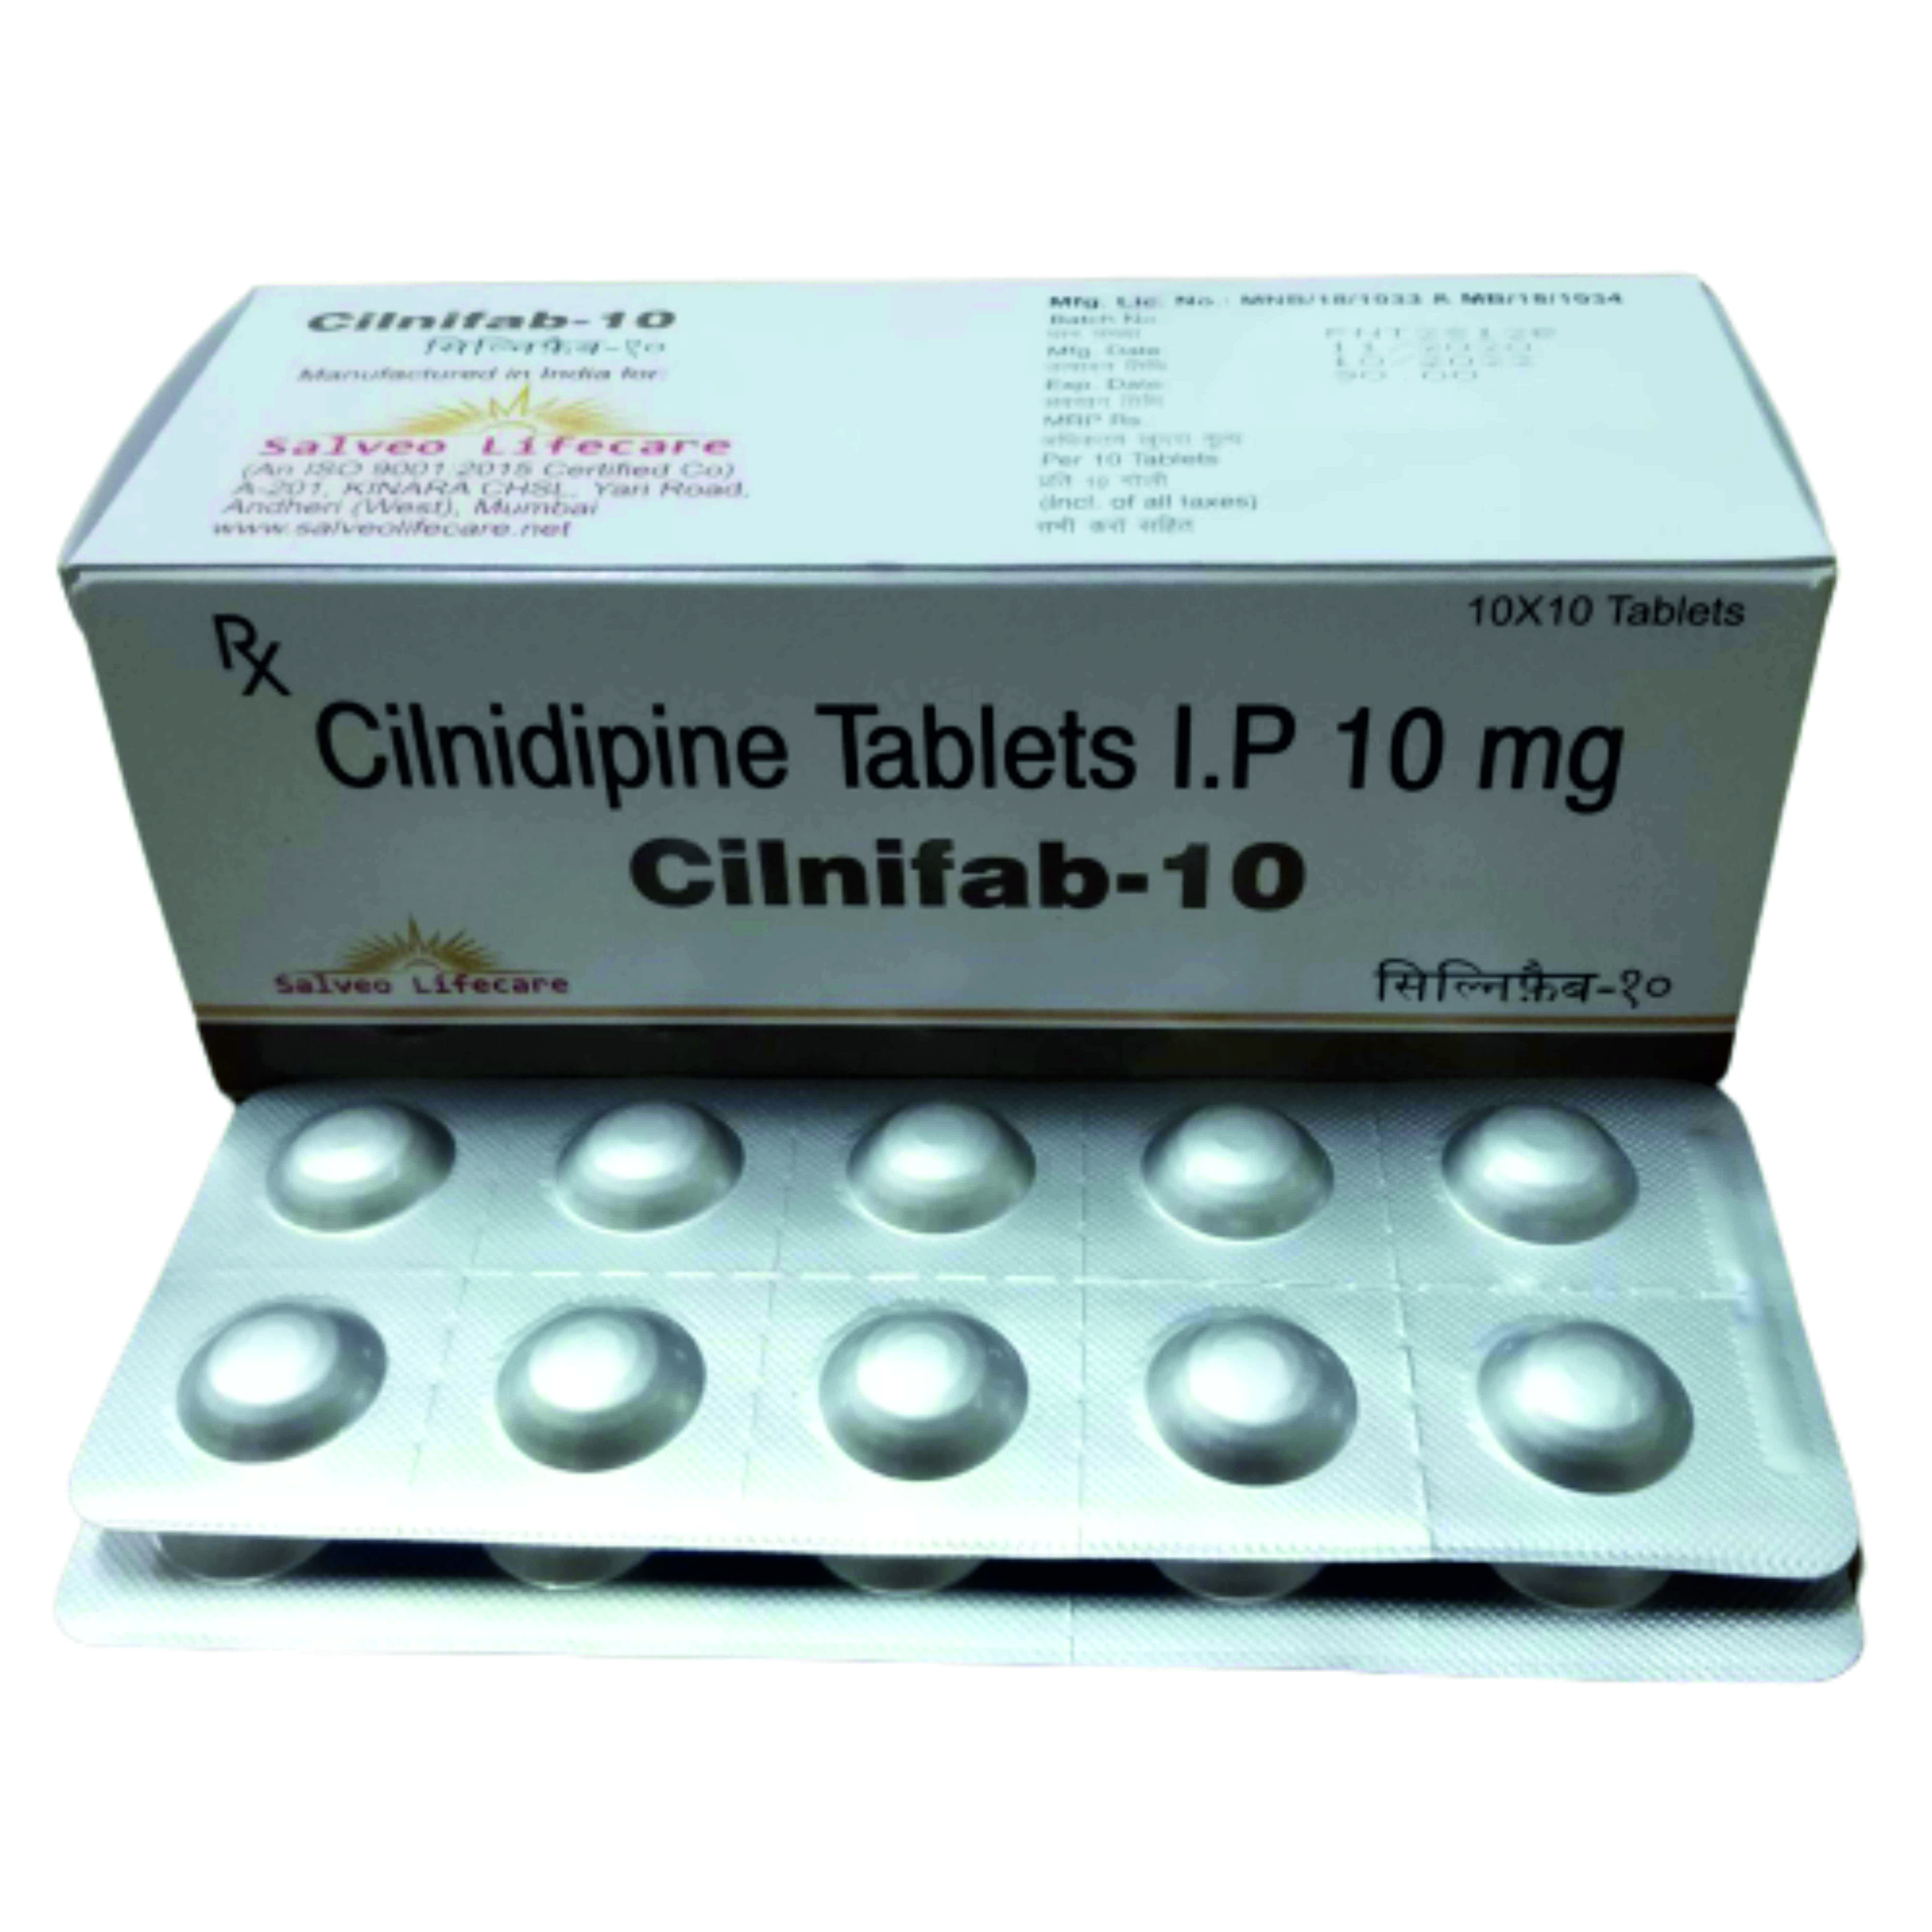 cilindipine 10 mg